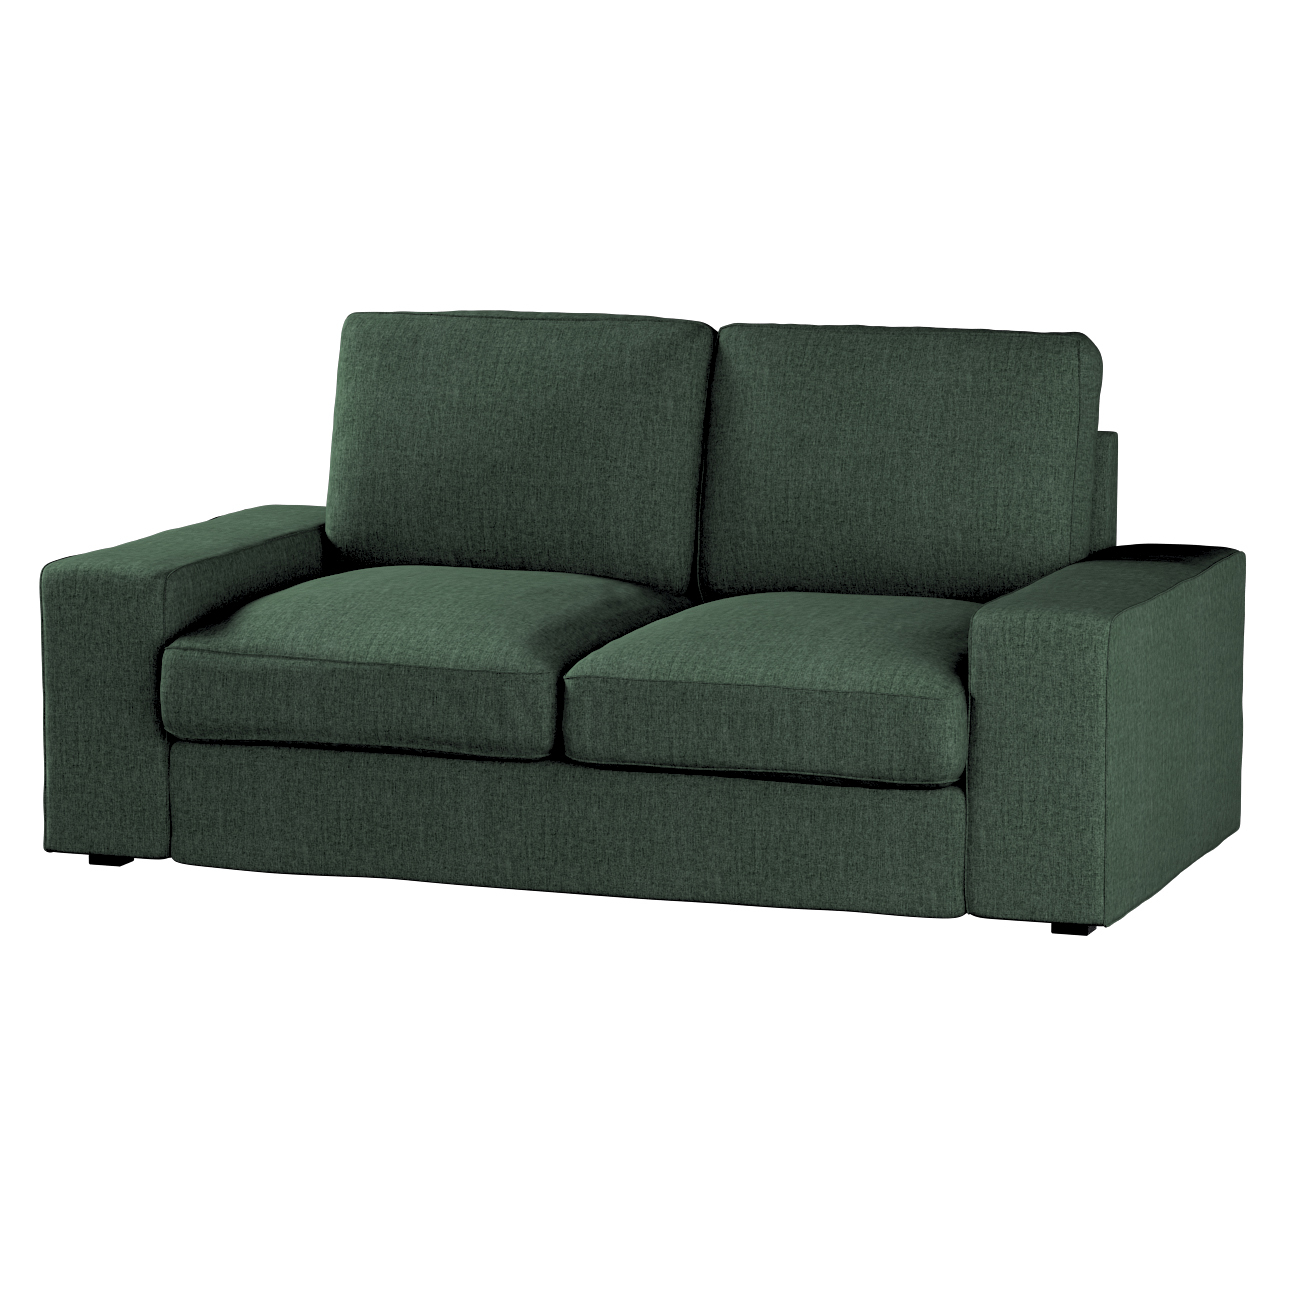 Bezug für Kivik 2-Sitzer Sofa, dunkelgrün, Bezug für Sofa Kivik 2-Sitzer, C günstig online kaufen